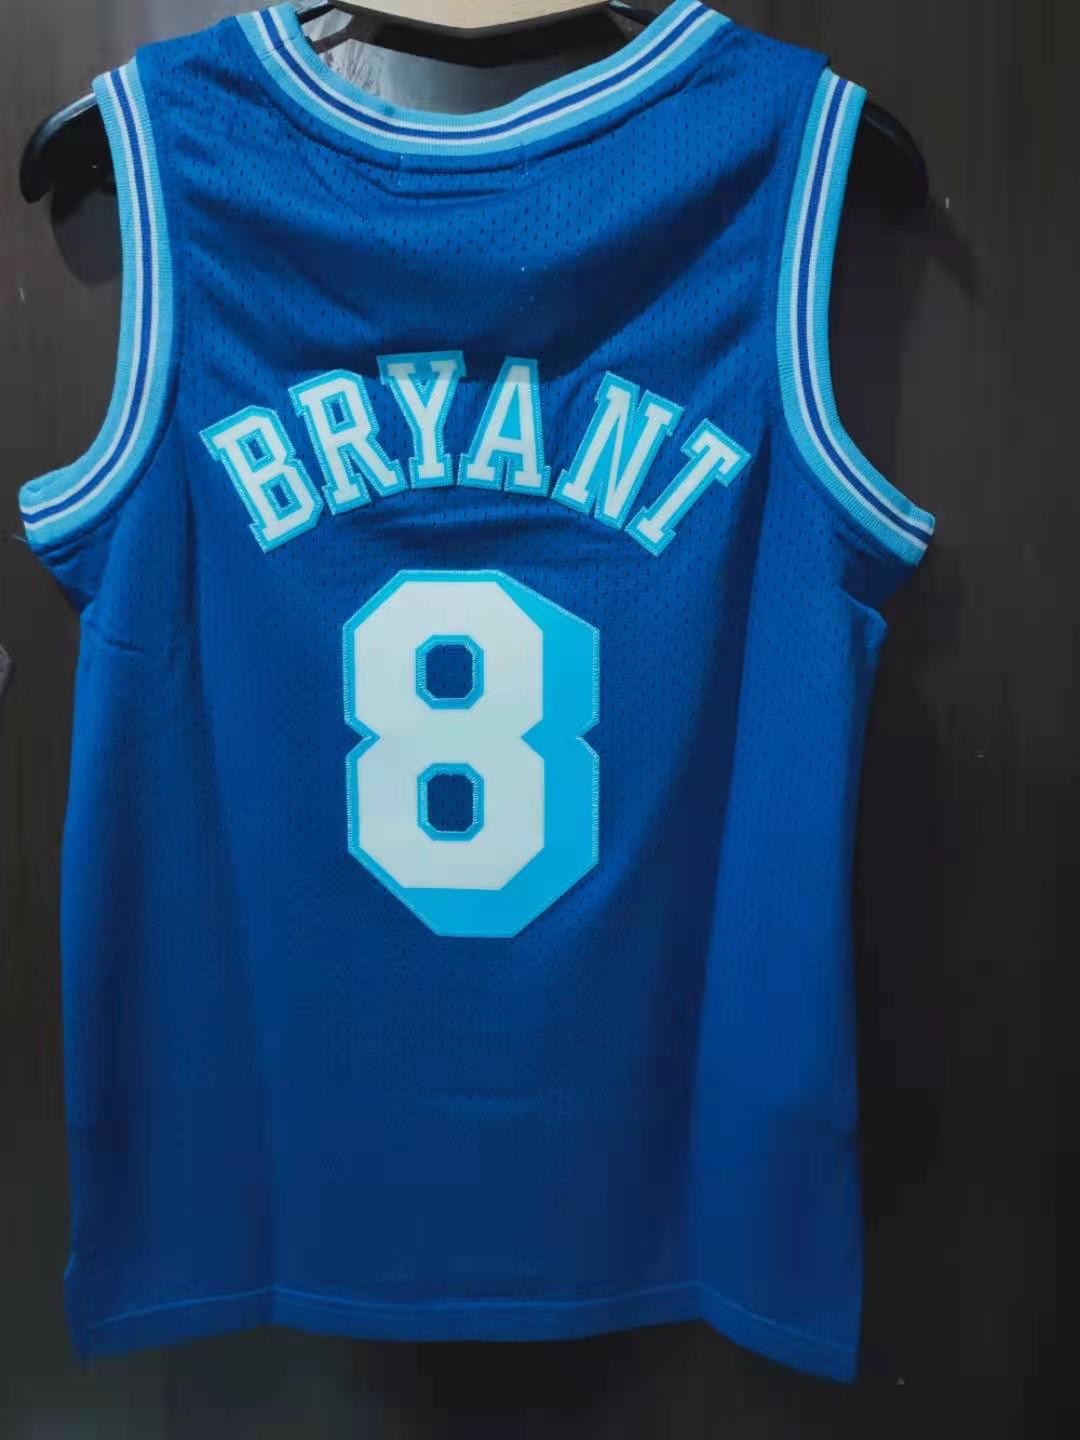 Kobe Bryant Apparel, Kobe Bryant Los Angeles Lakers Jerseys